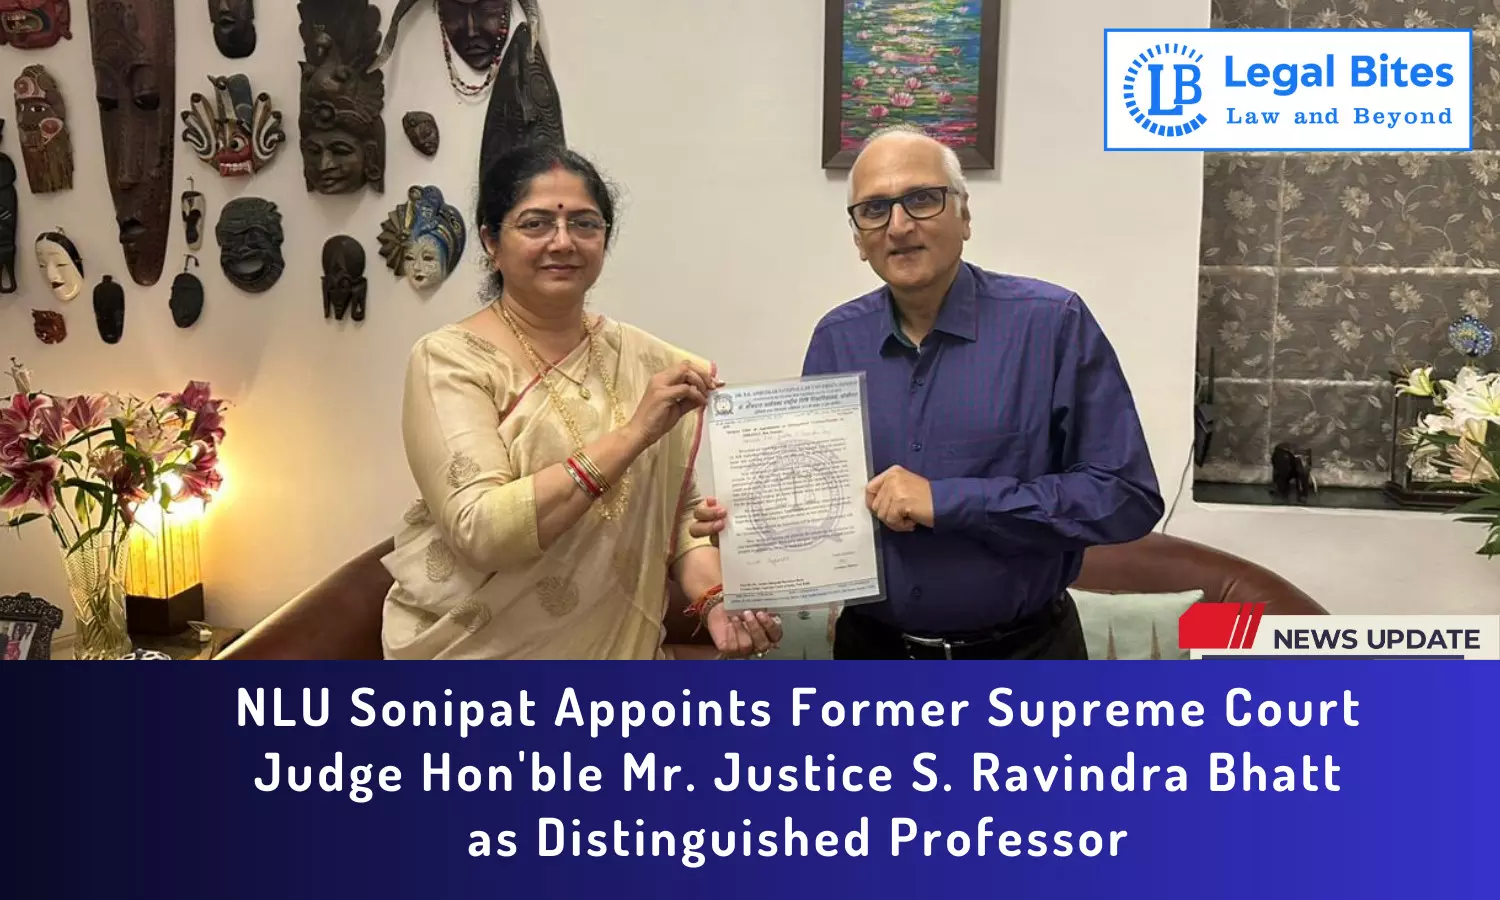 Justice Ravindra Bhatt Appointed Distinguished Professor at Dr. B.R. Ambedkar National Law University, Sonipat